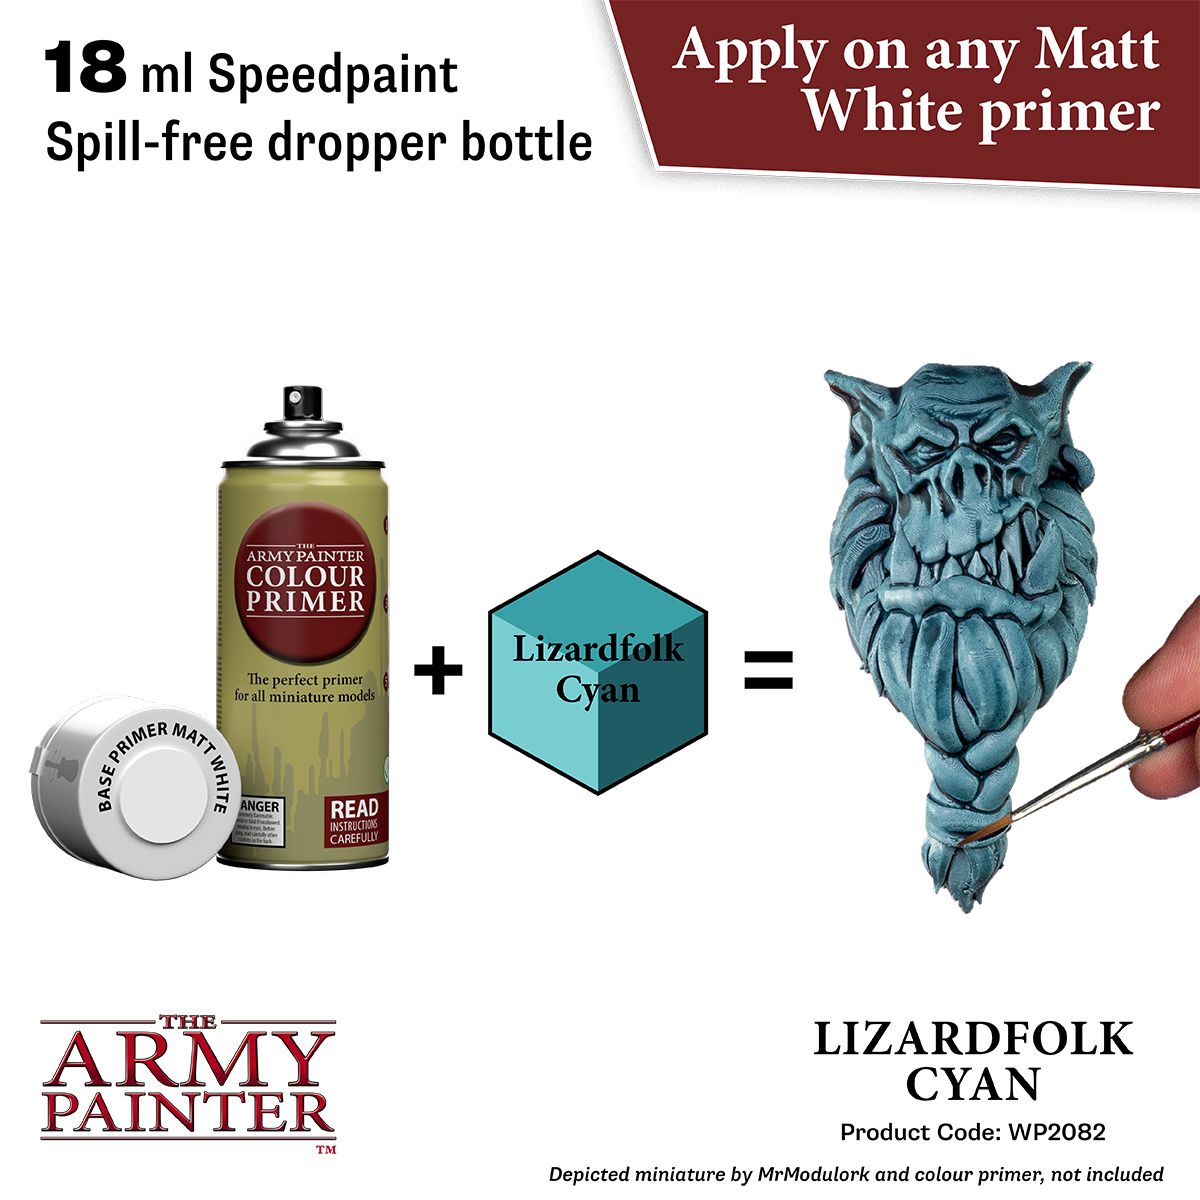 The Army Painter - Speedpaint 2.0, Lizardfolk Cyan